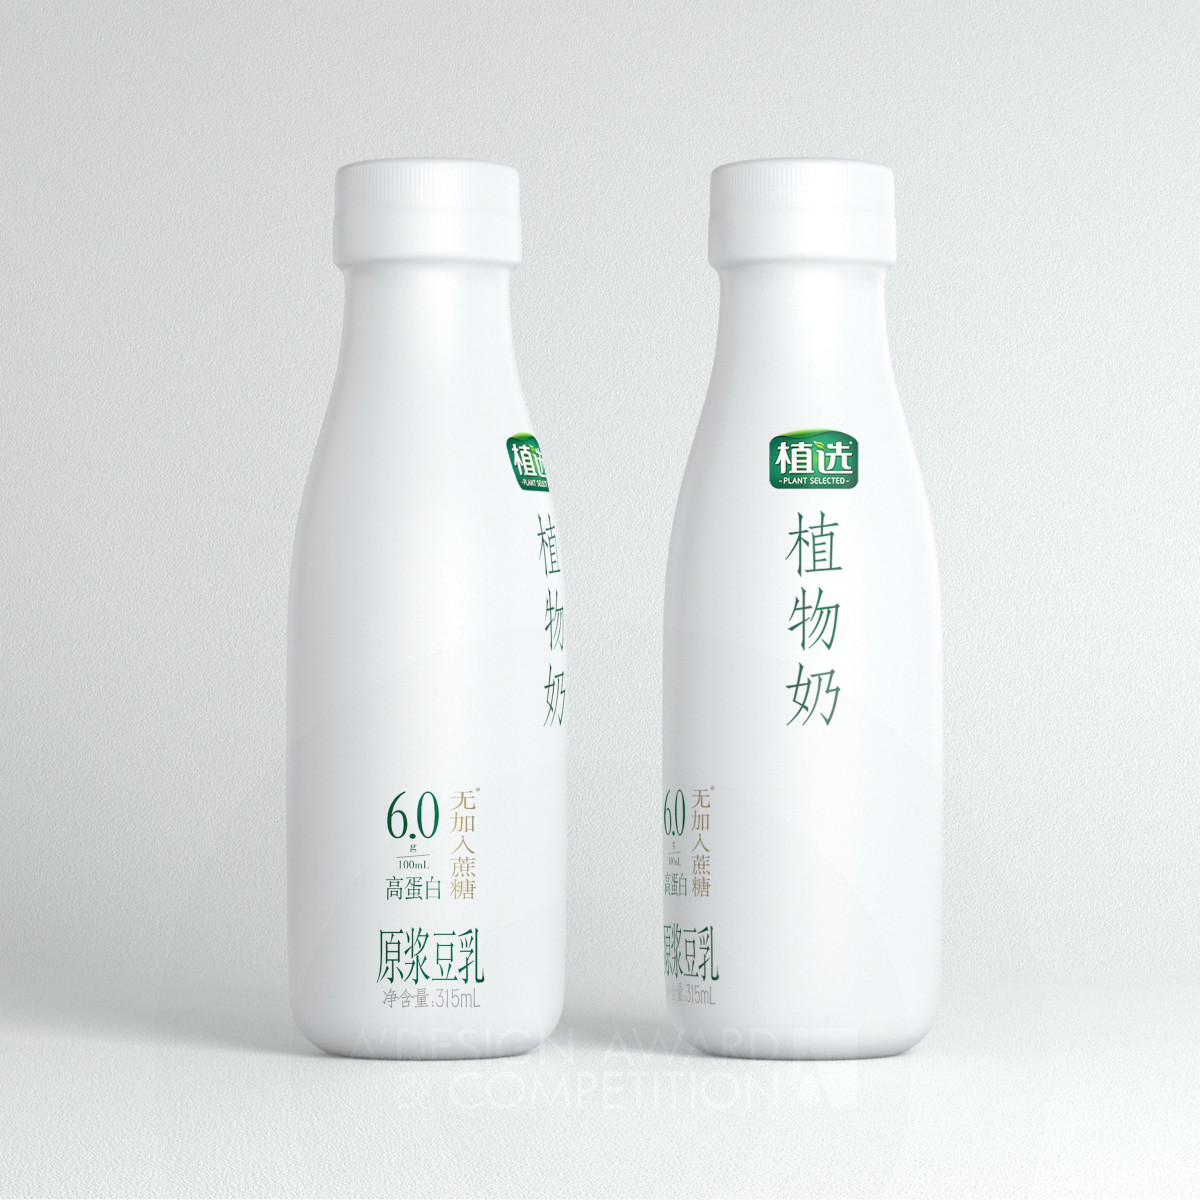 Plant Selected Beverage by Blackandgold Design (Shanghai) Co., Ltd.